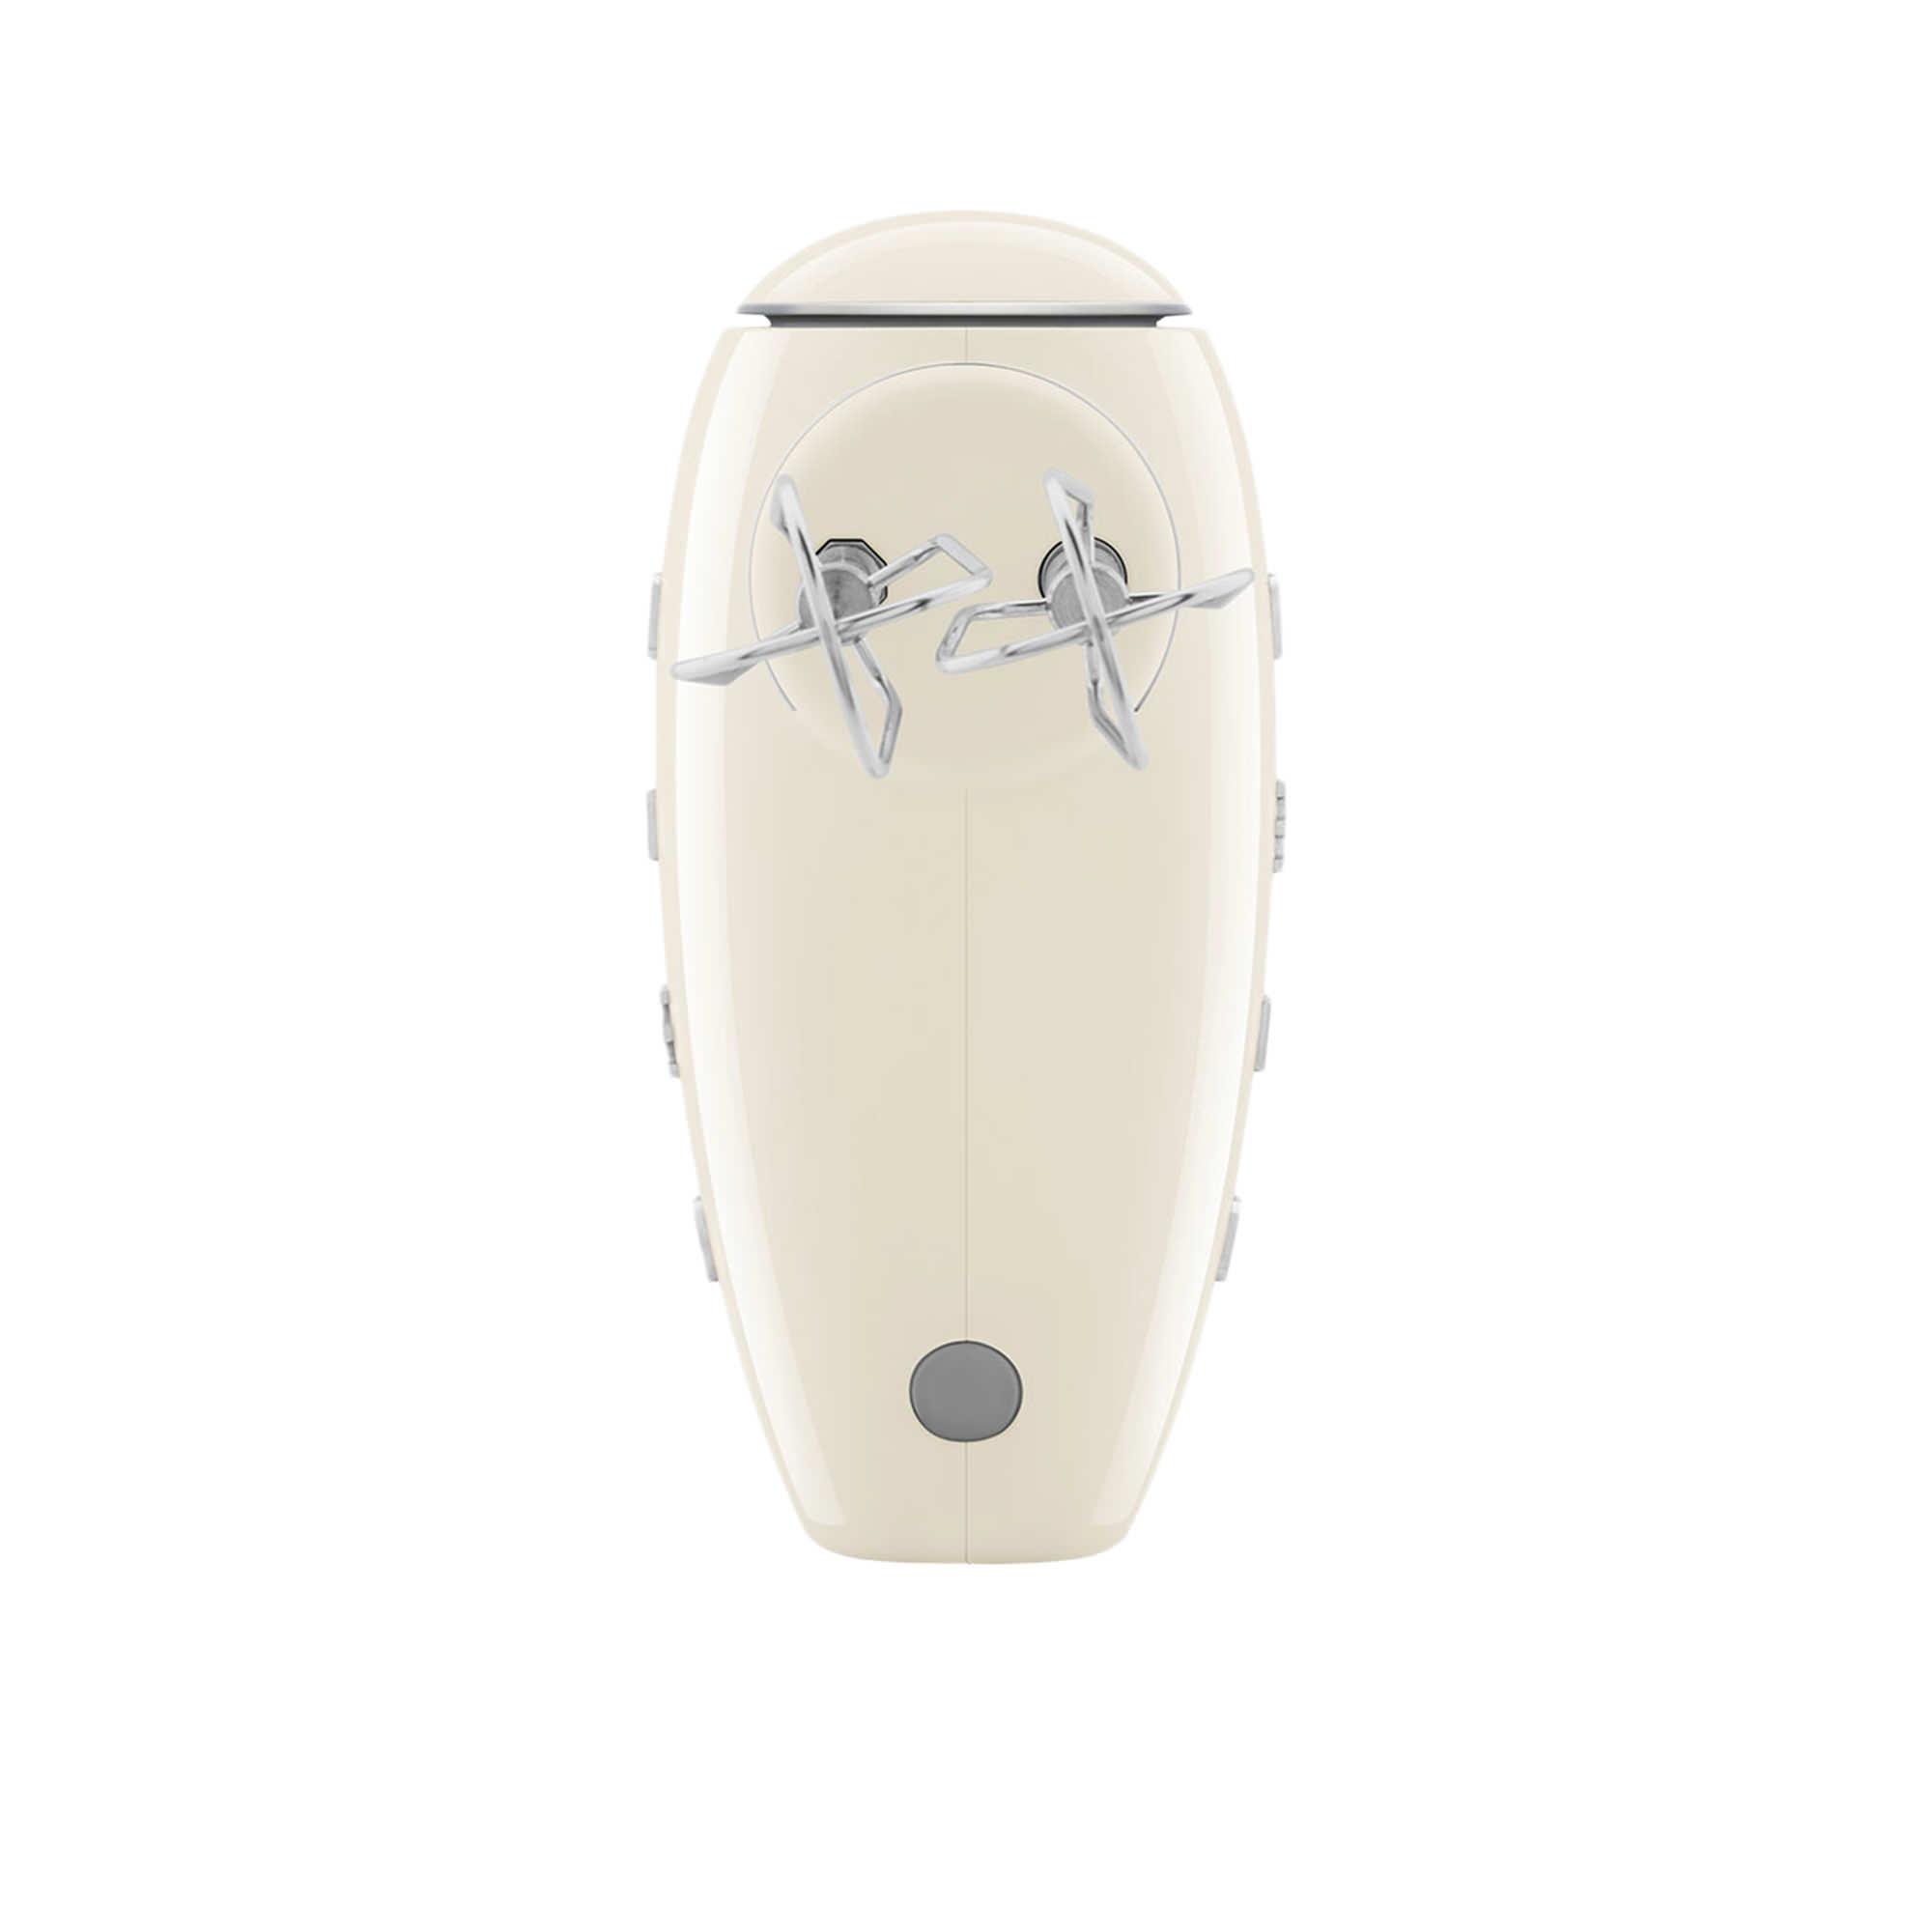 Smeg 50's Retro Style Digital Hand Mixer Cream Image 4